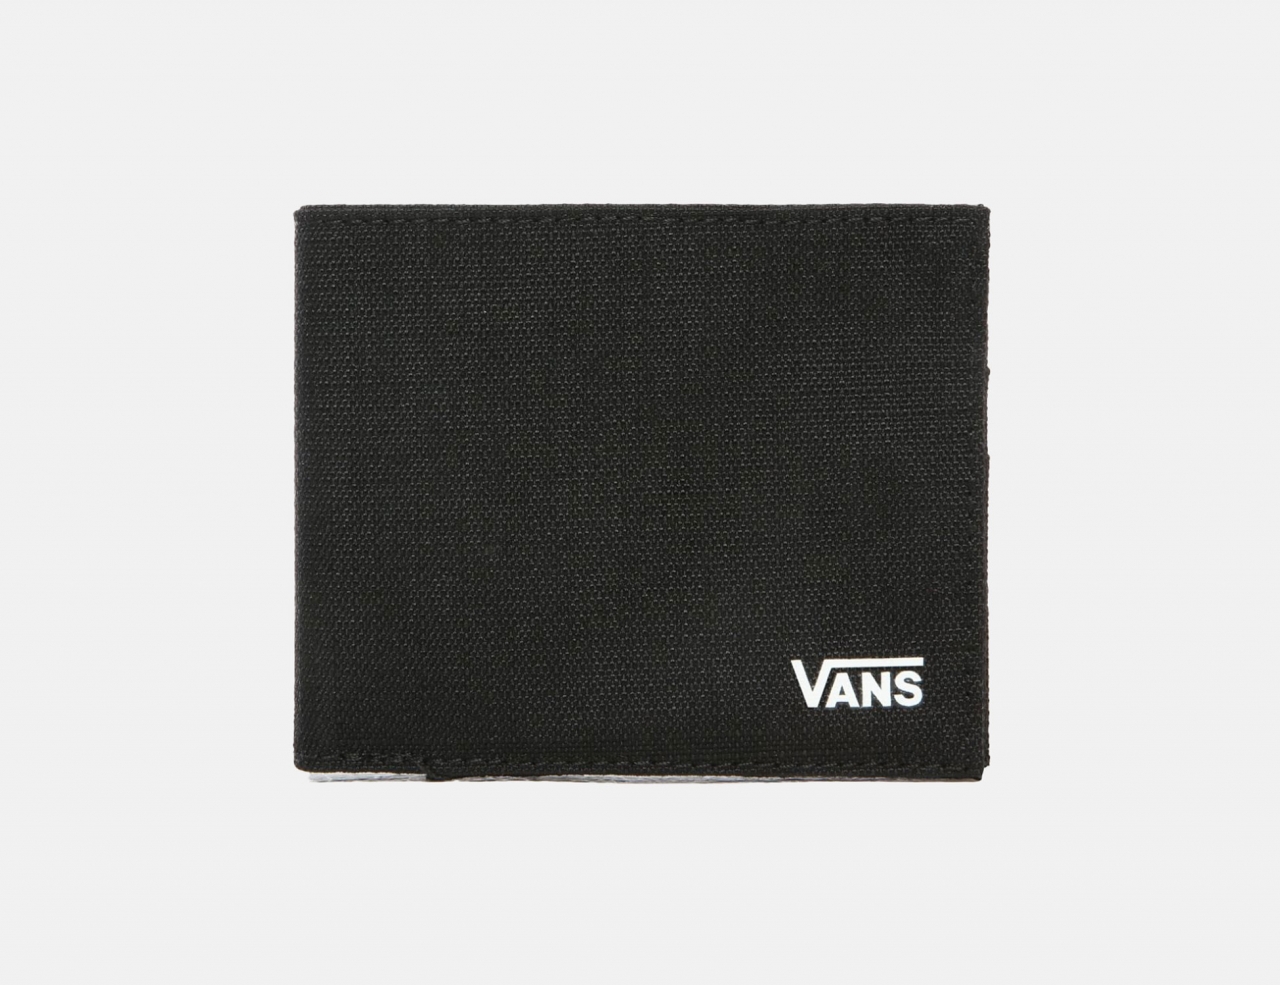 VANS Ultra Thin Wallet - Black / White